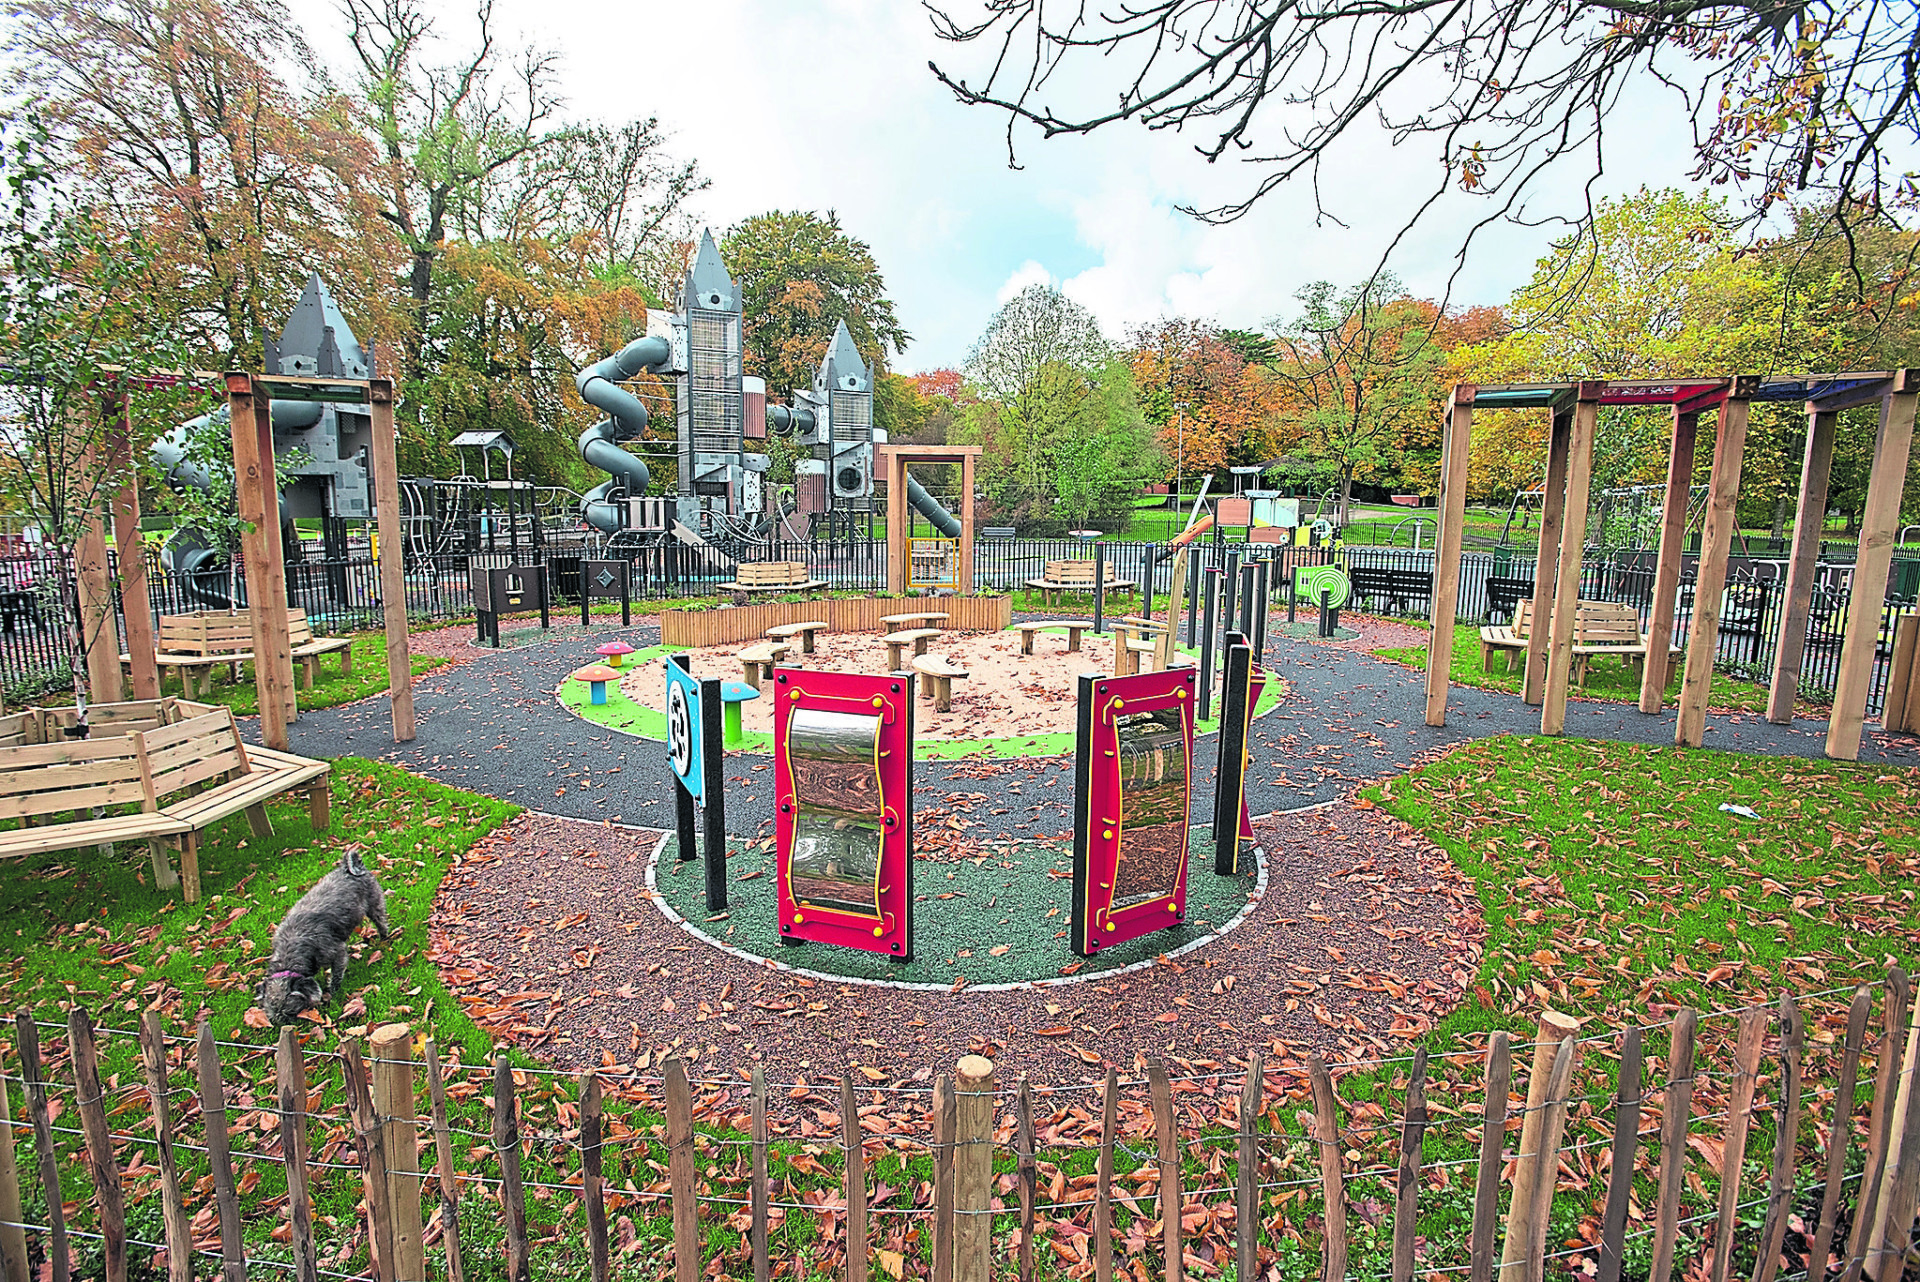 Police probe break-in at new Omagh play park